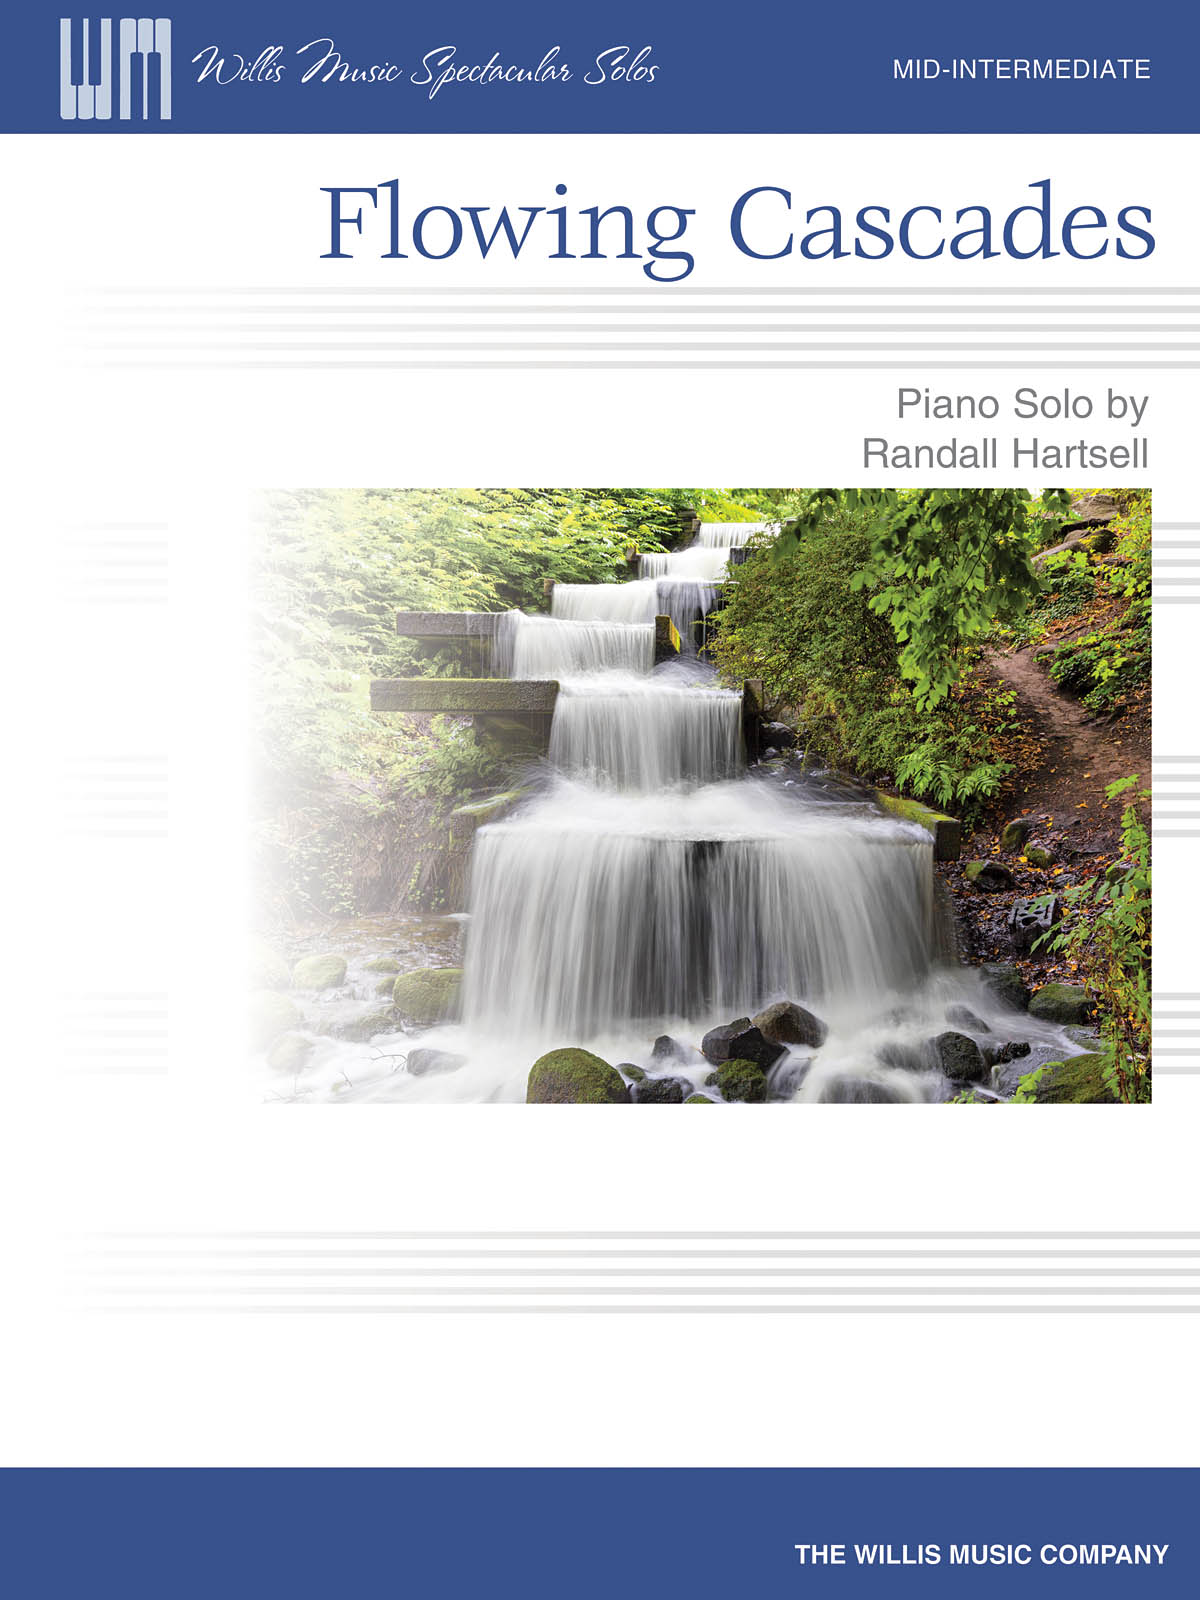 Flowing Cascades - Mid-Intermediate Level